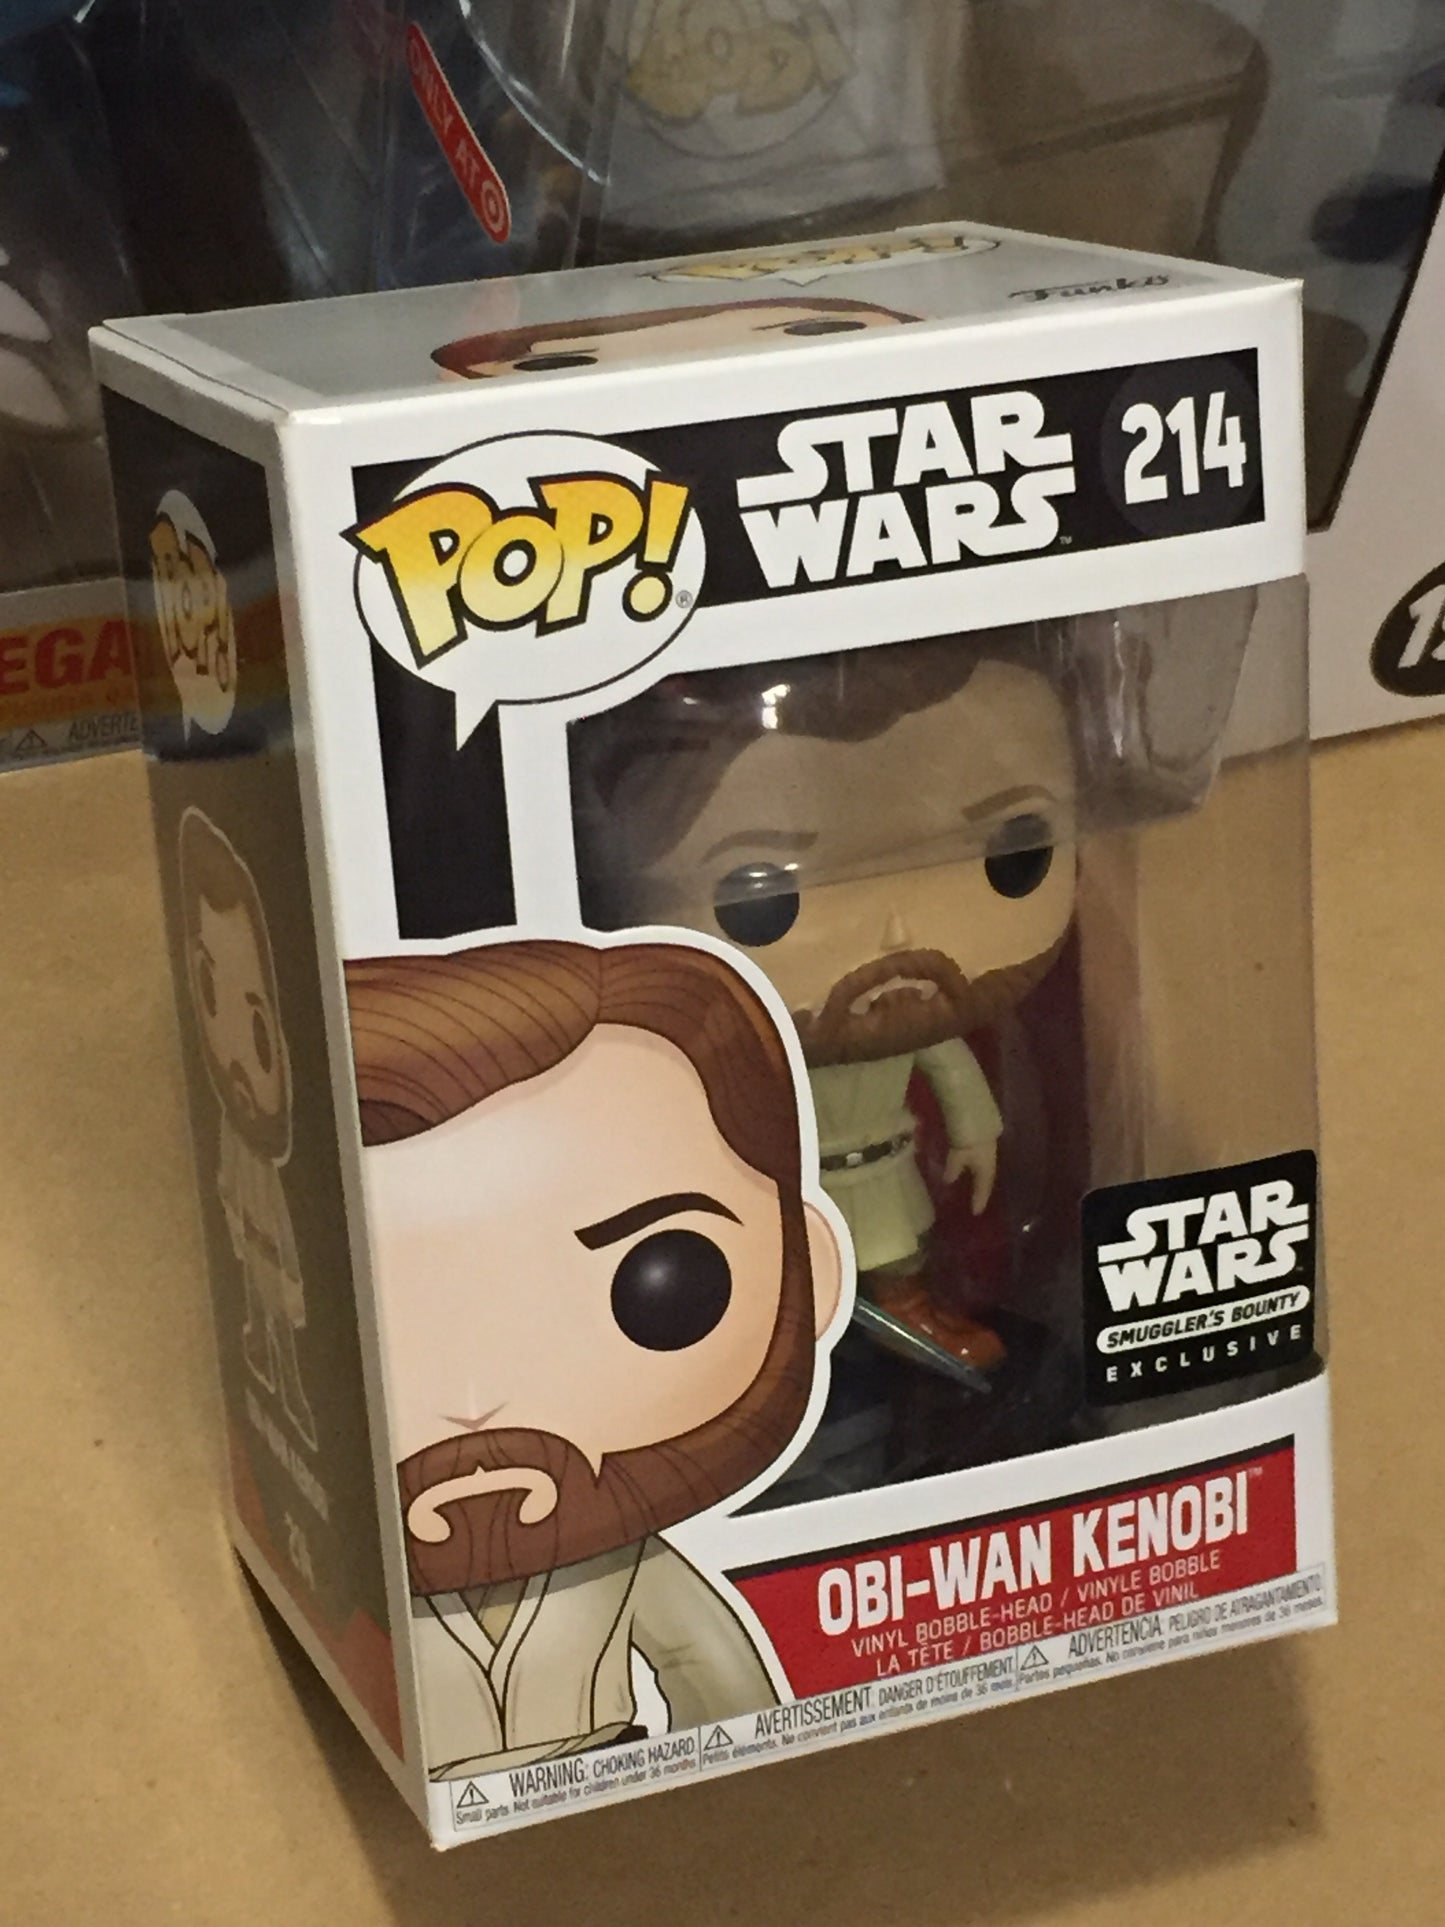 Star Wars - Obi-Wan Kenobi #214 - Exclusive Funko Pop! Vinyl Figure